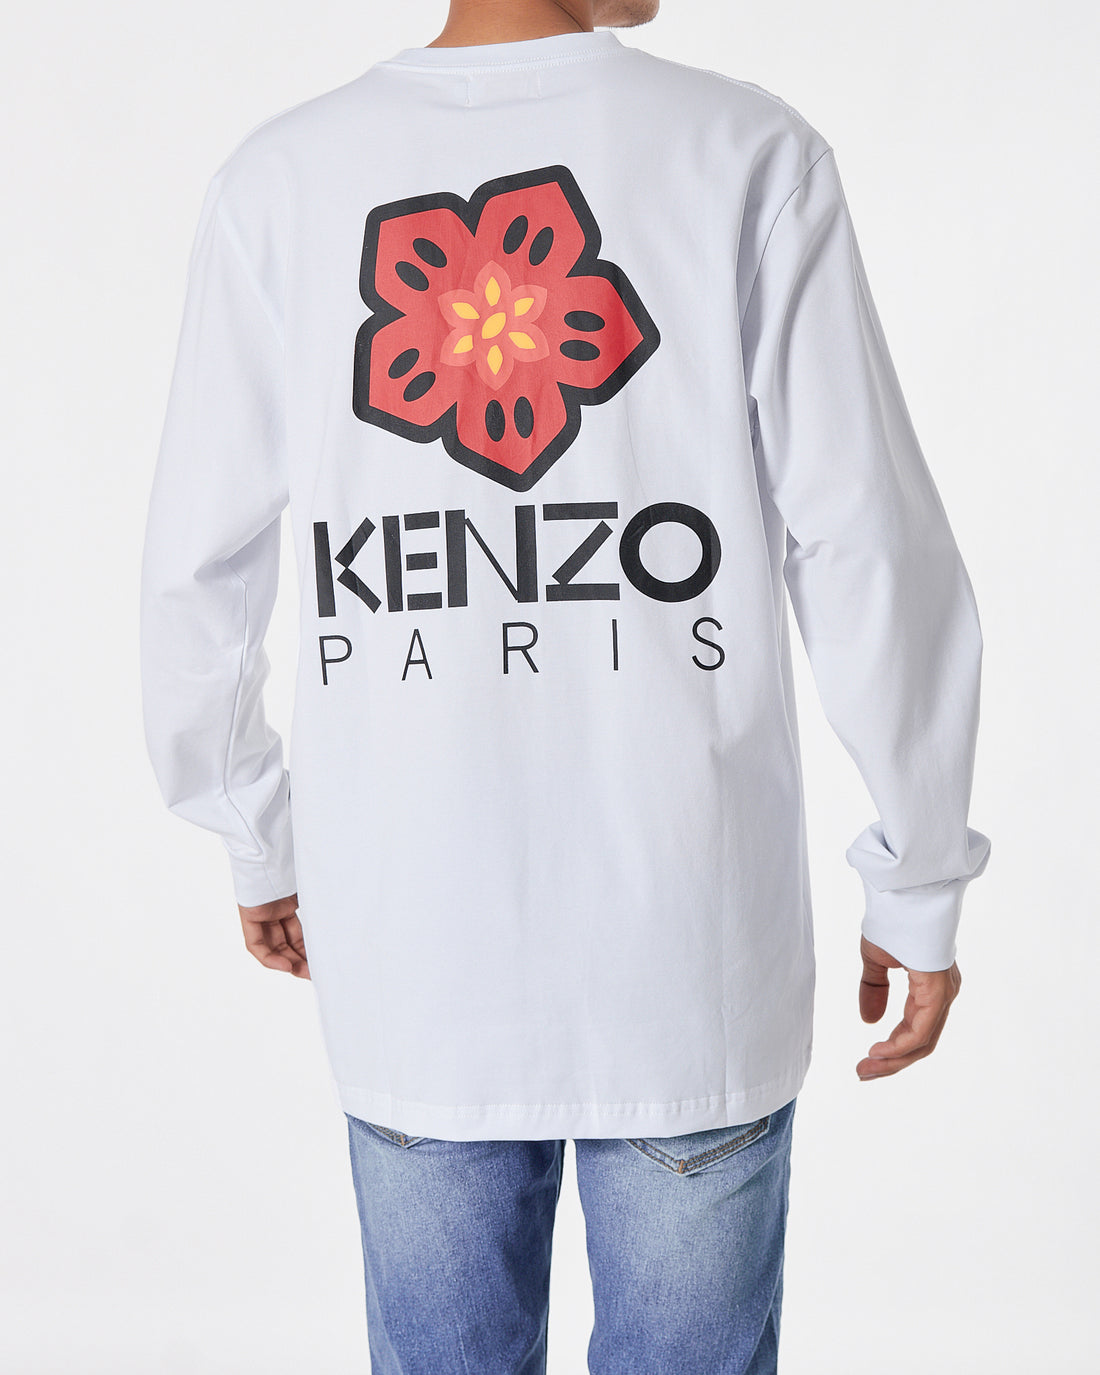 KEN Back Logo Printed Men White T-Shirt Long Sleeve 23.90